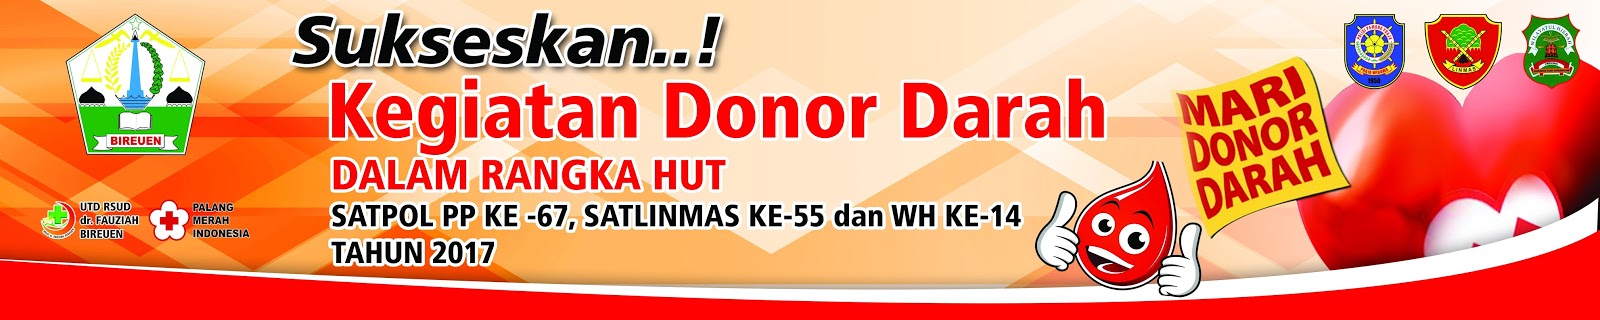  Desain  Spanduk  Donor  Darah  Cdr  Wallpaper Won